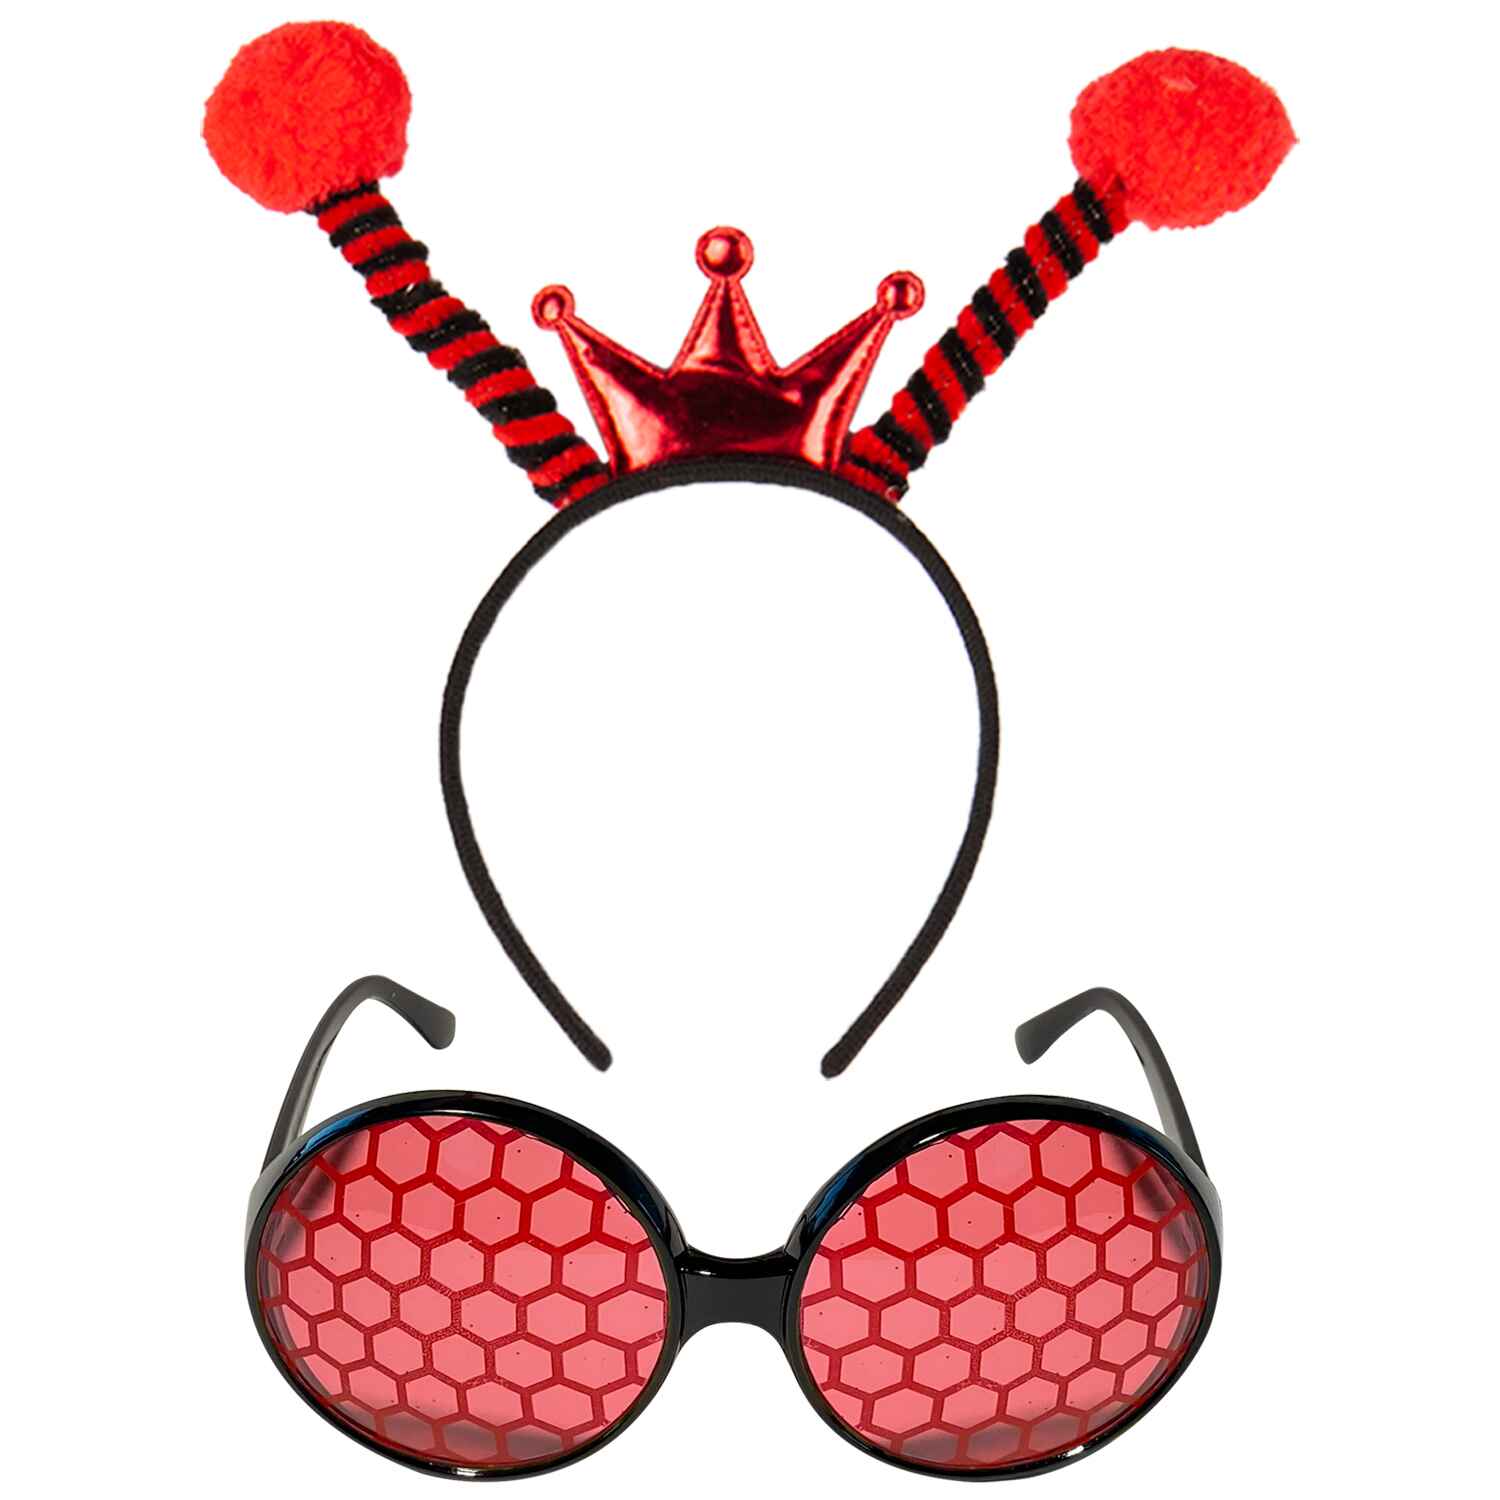  Ladybug Costume Accessories